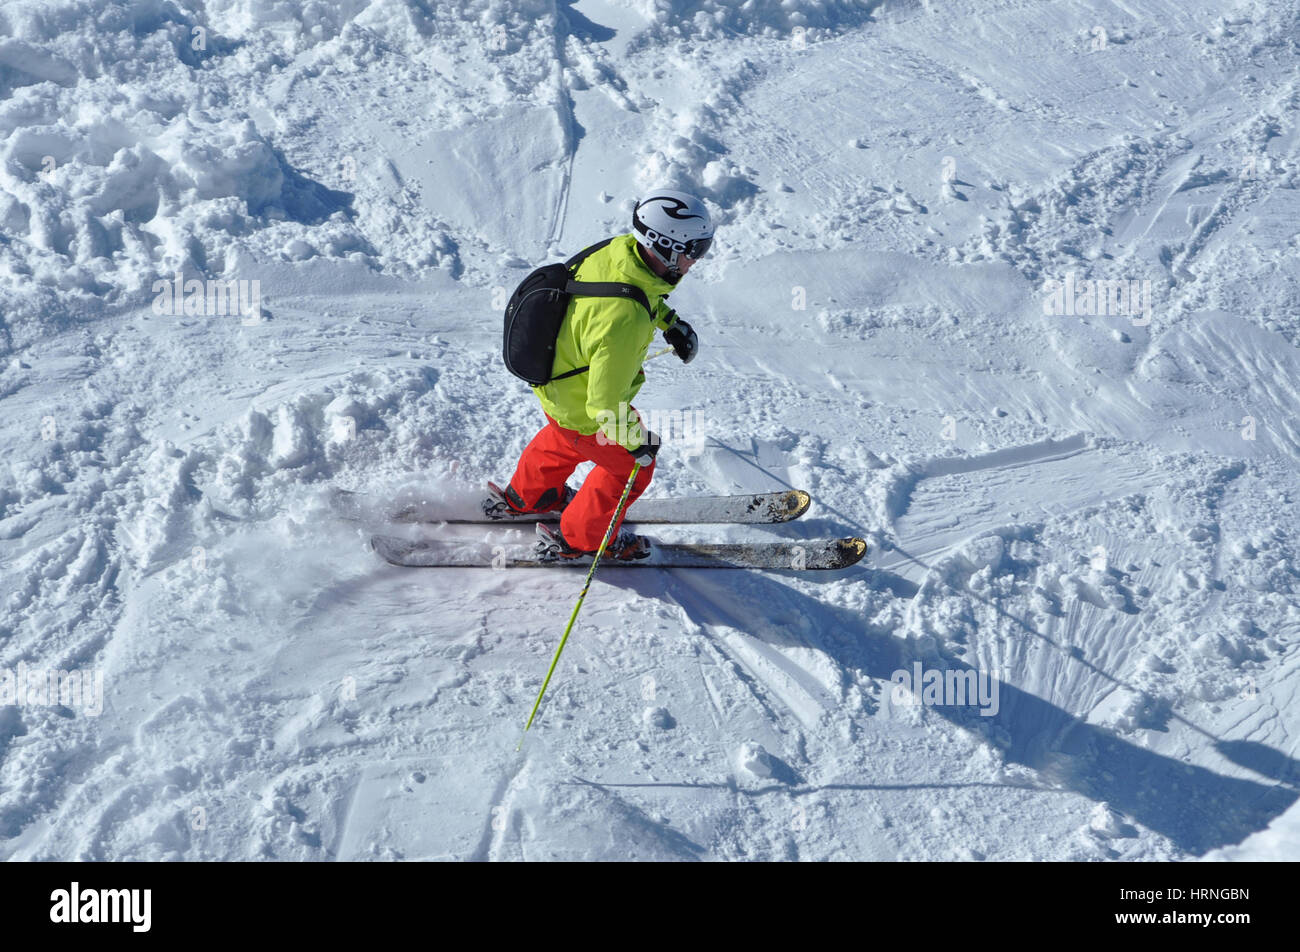 KAPRUN, AUSTRIA - MARCH 3, 2012: Skiers enjoying one of the last ski days of the season, skiing in the Austrian Alps Stock Photo